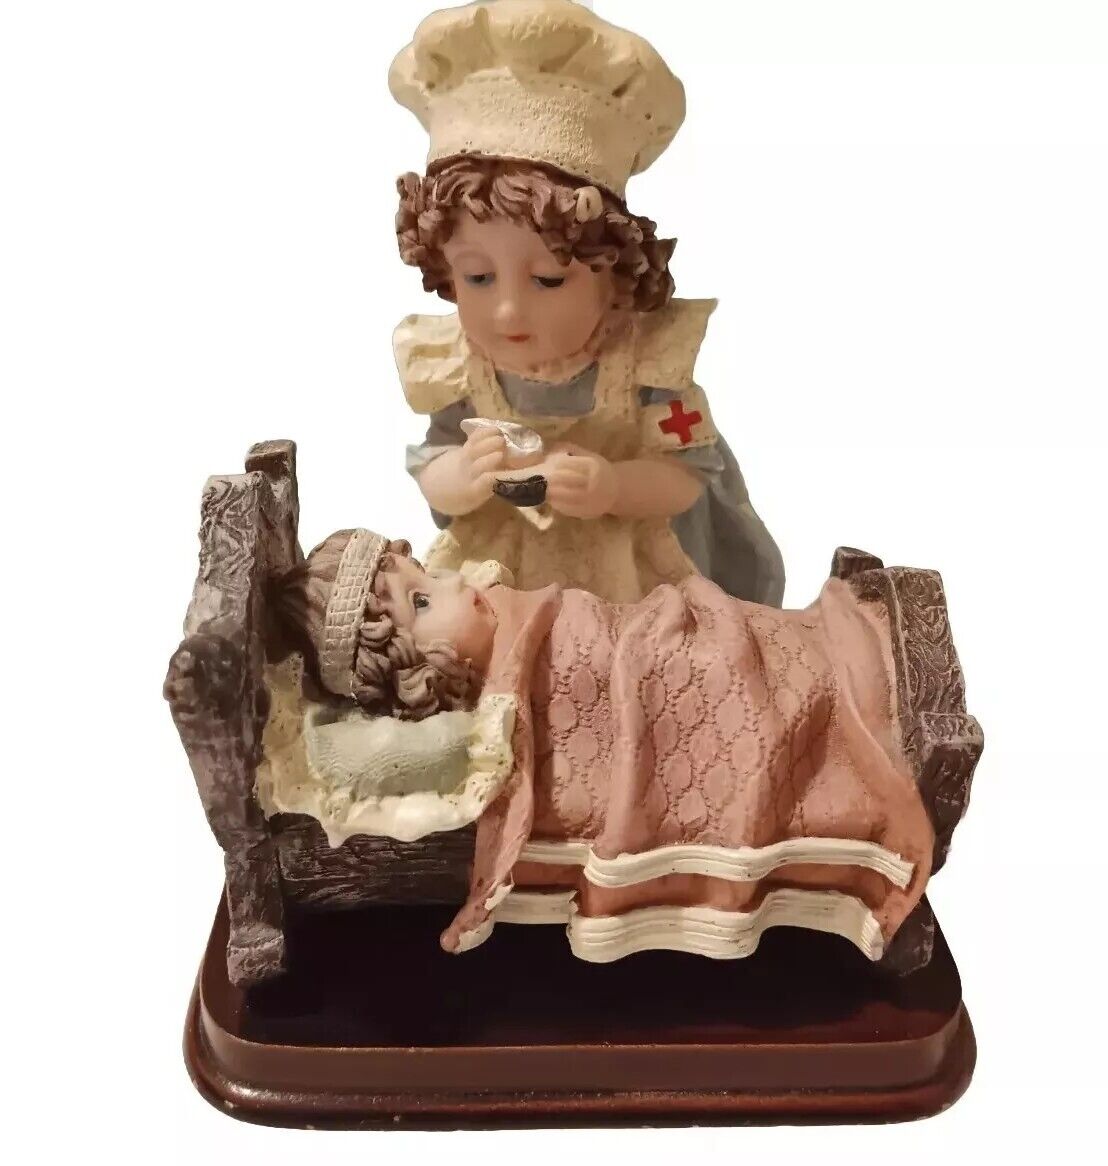 Handpainted Vintage Nurse Caring For A Child Figurine